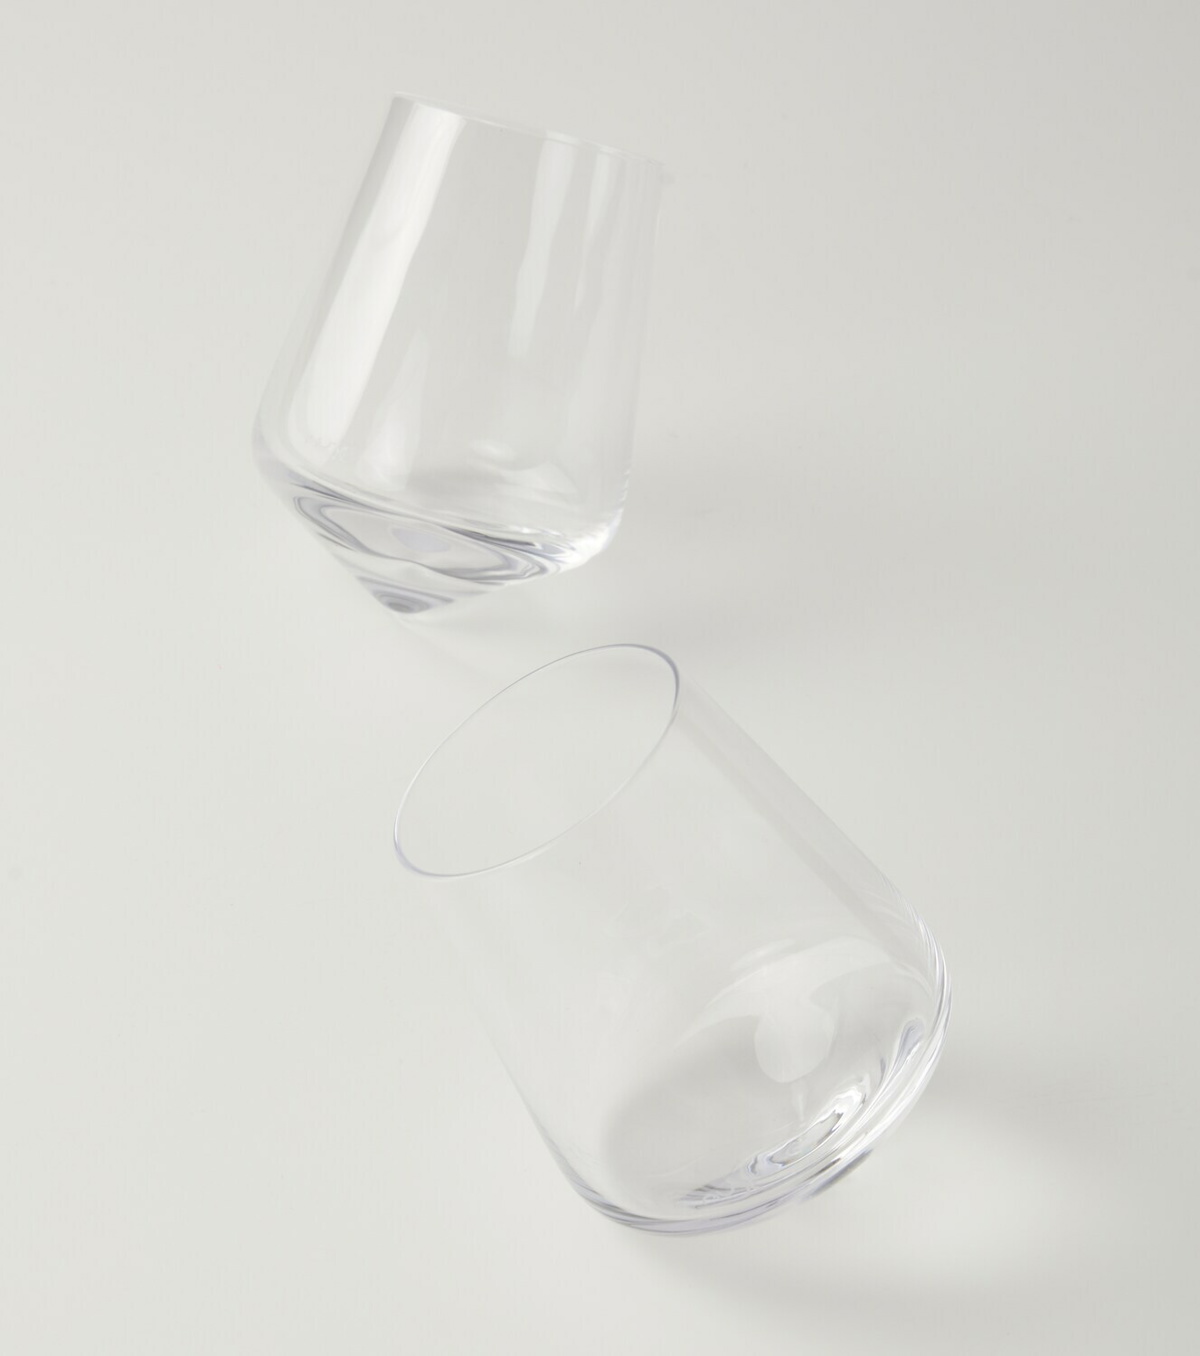 Balance Set of 2 Wine Glasses